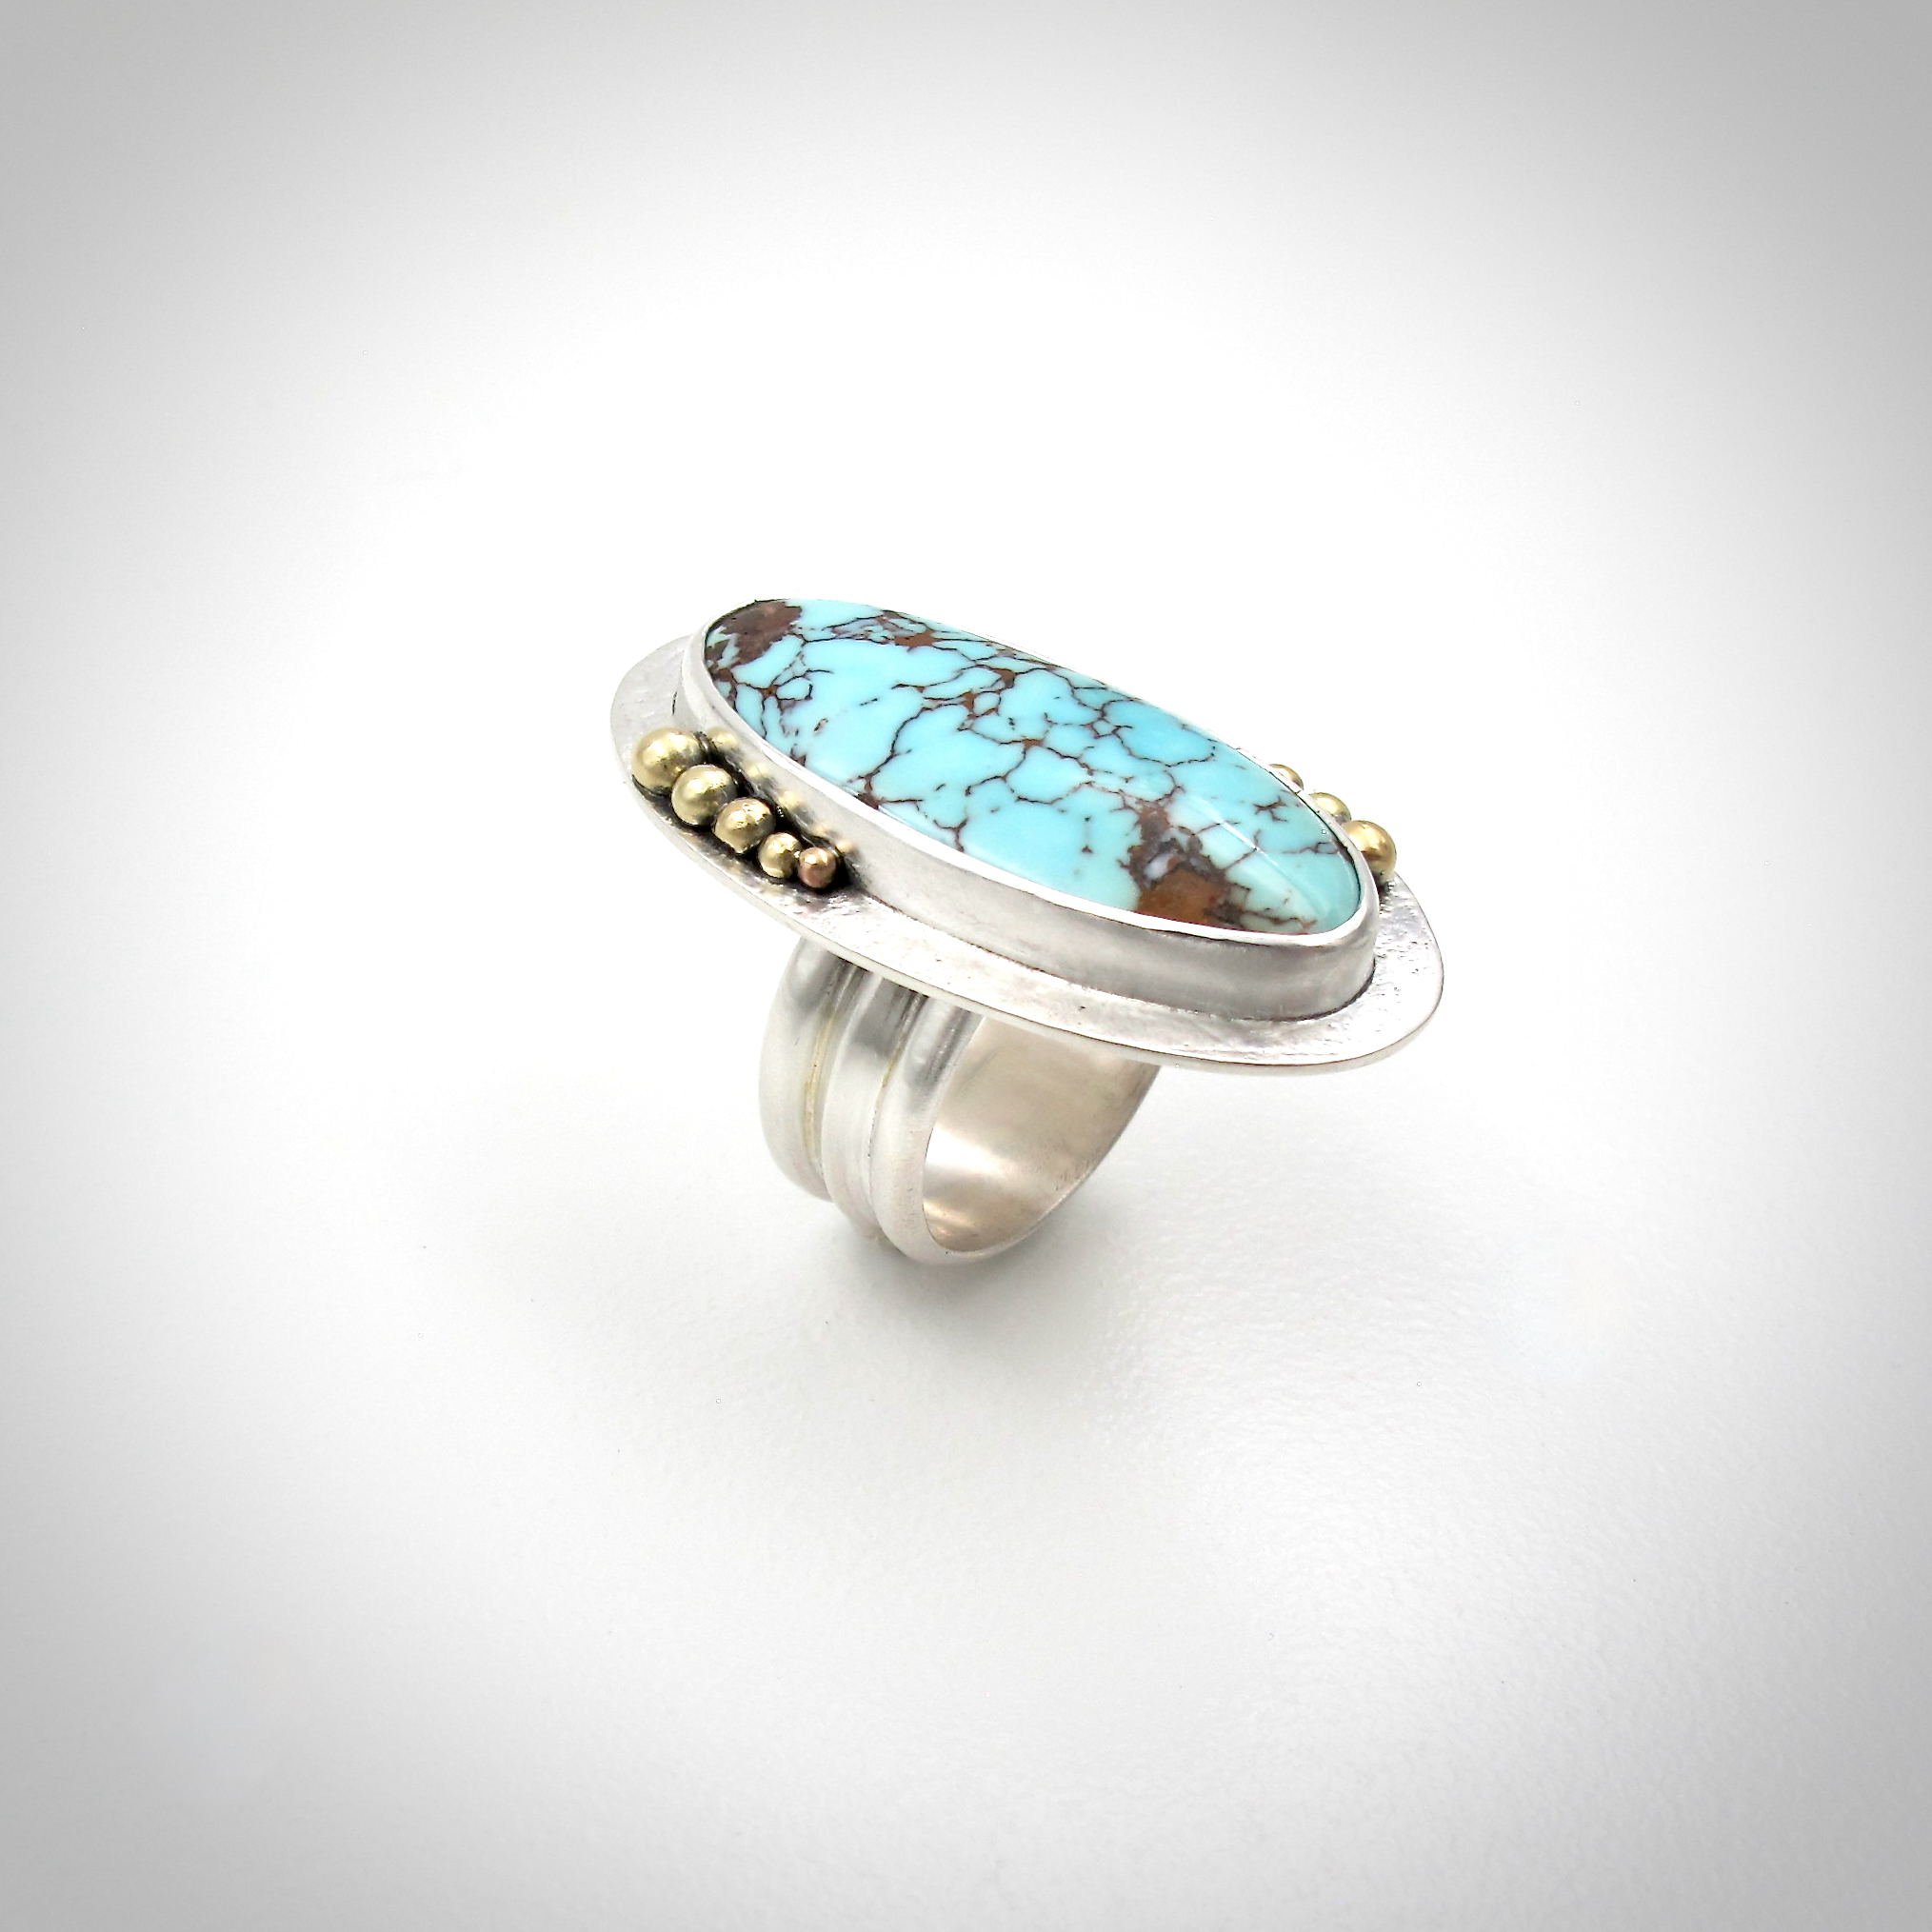 Godber-Burnham turquoise, turquoise ring, gold and turquoise ring, natural turquoise